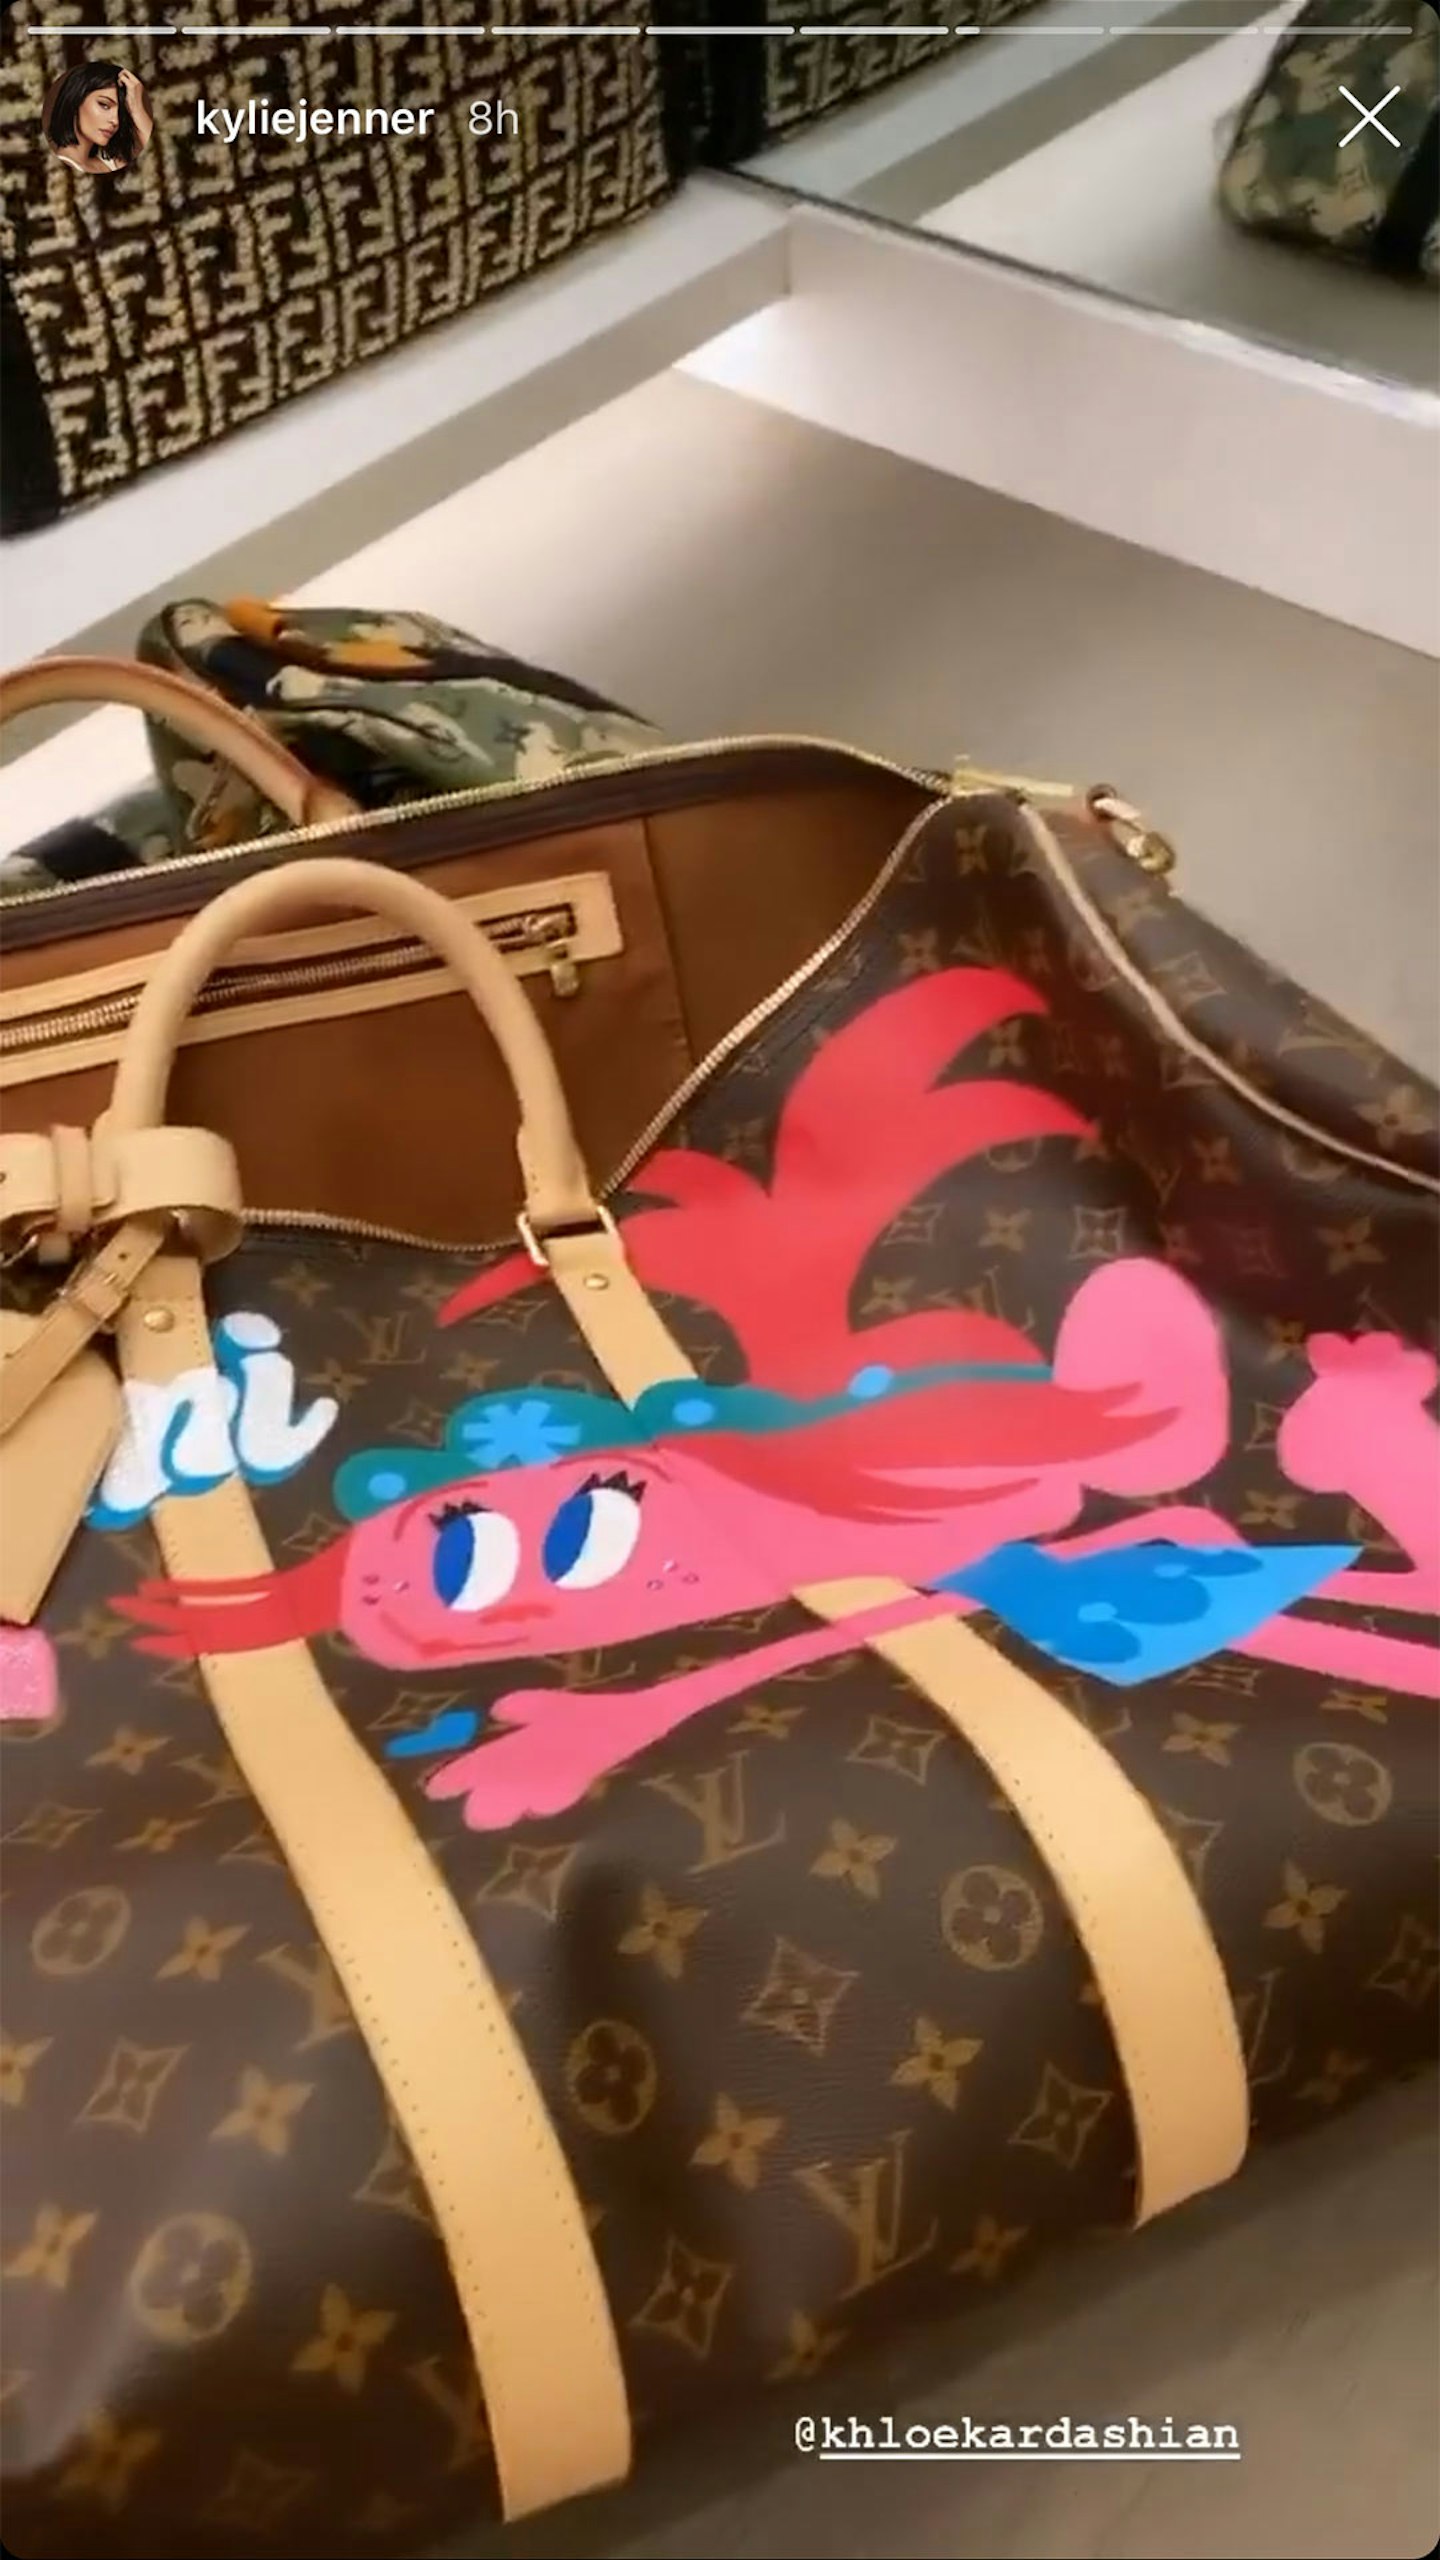 Khloe Kardashian, Scott Disick Louis Vuitton Handbags Contest